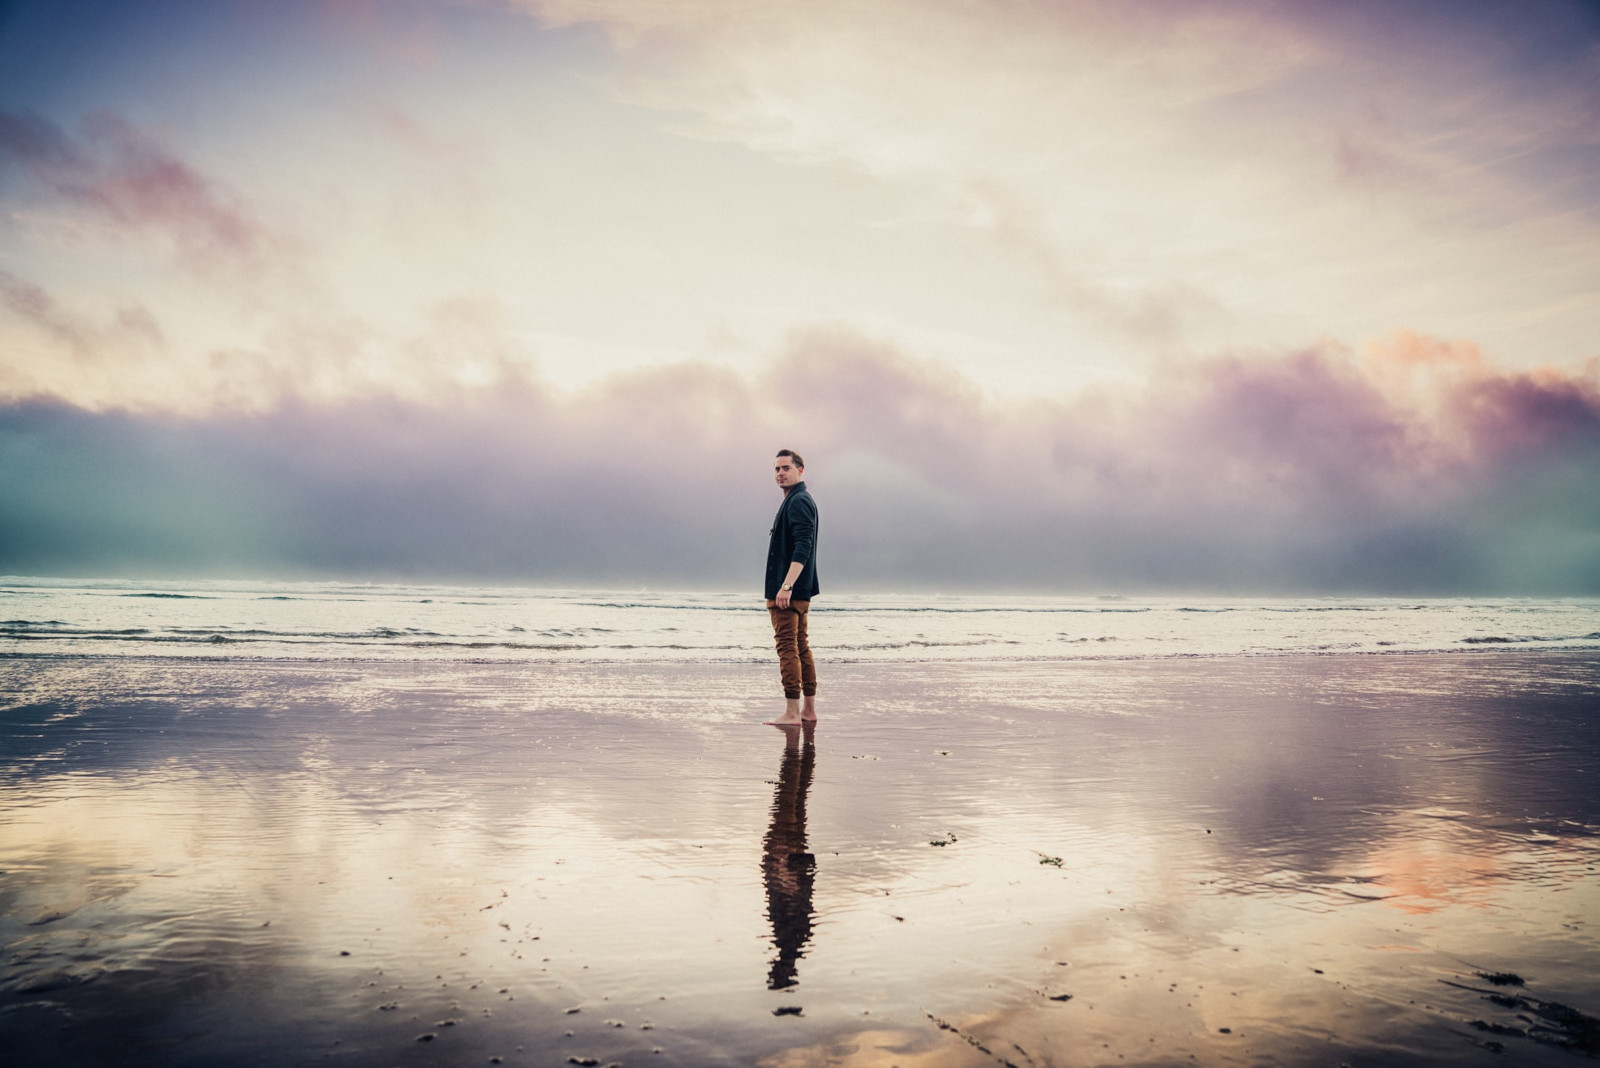 Man standing alone on a beach